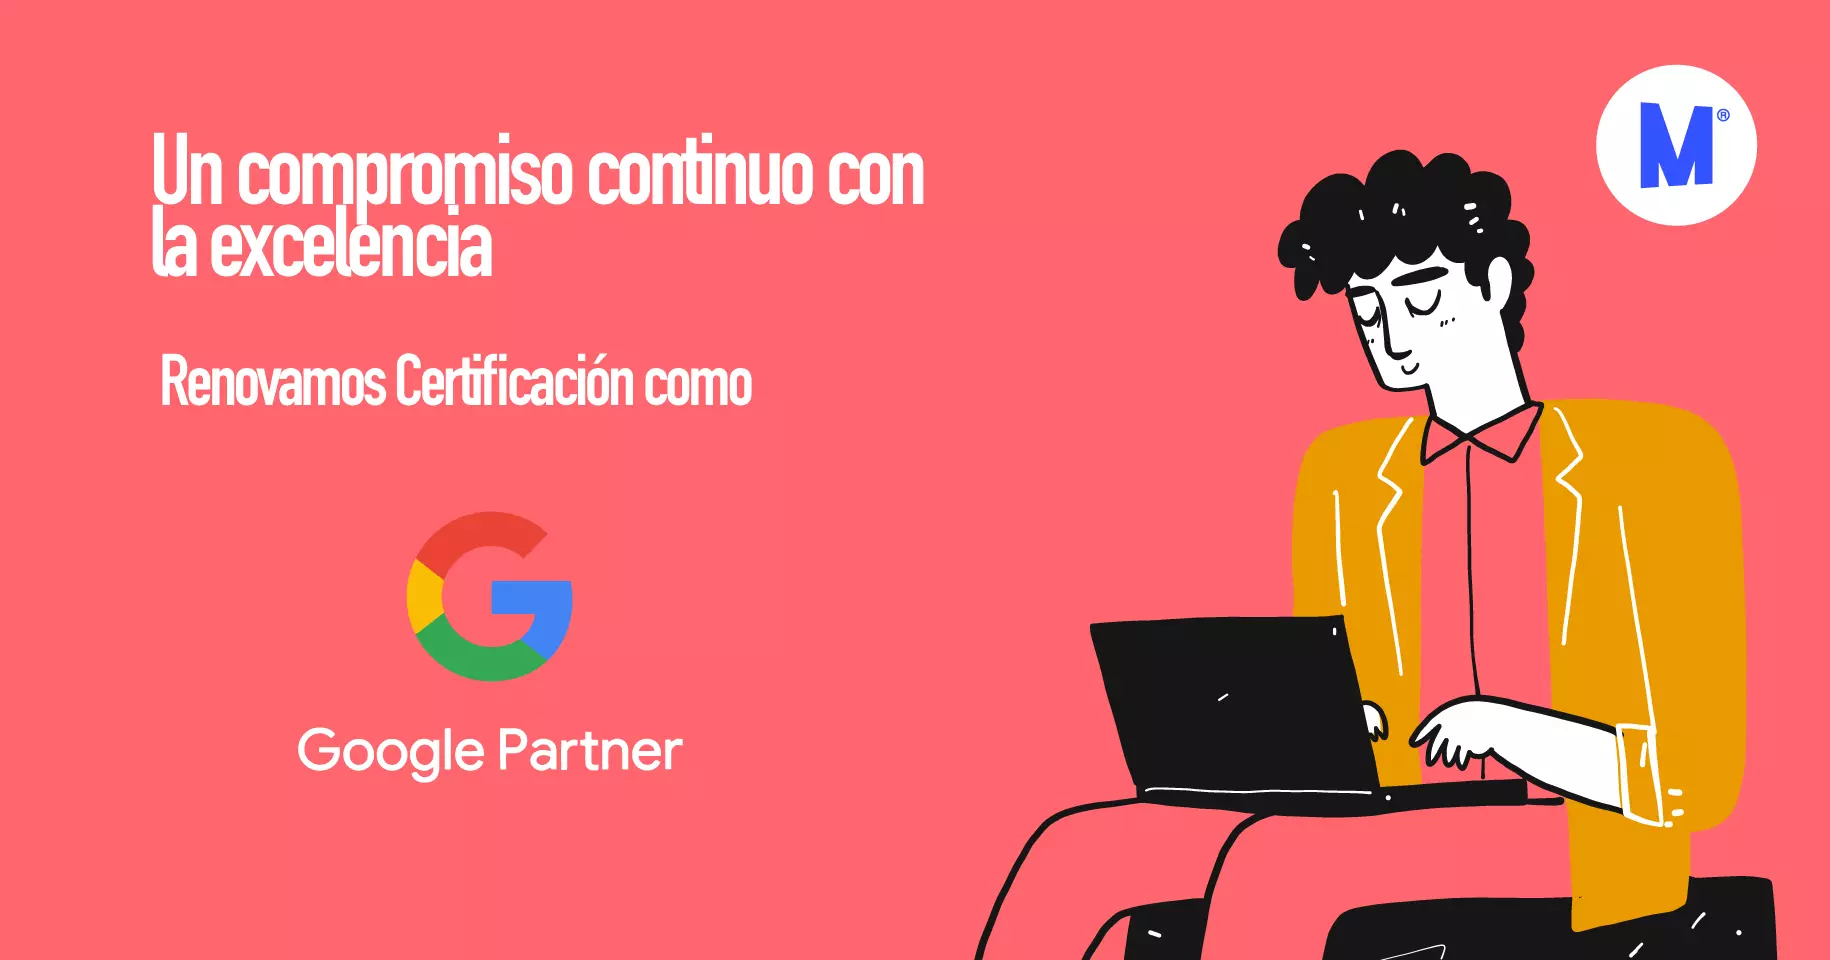 Renovamos Certificación como Google Partner